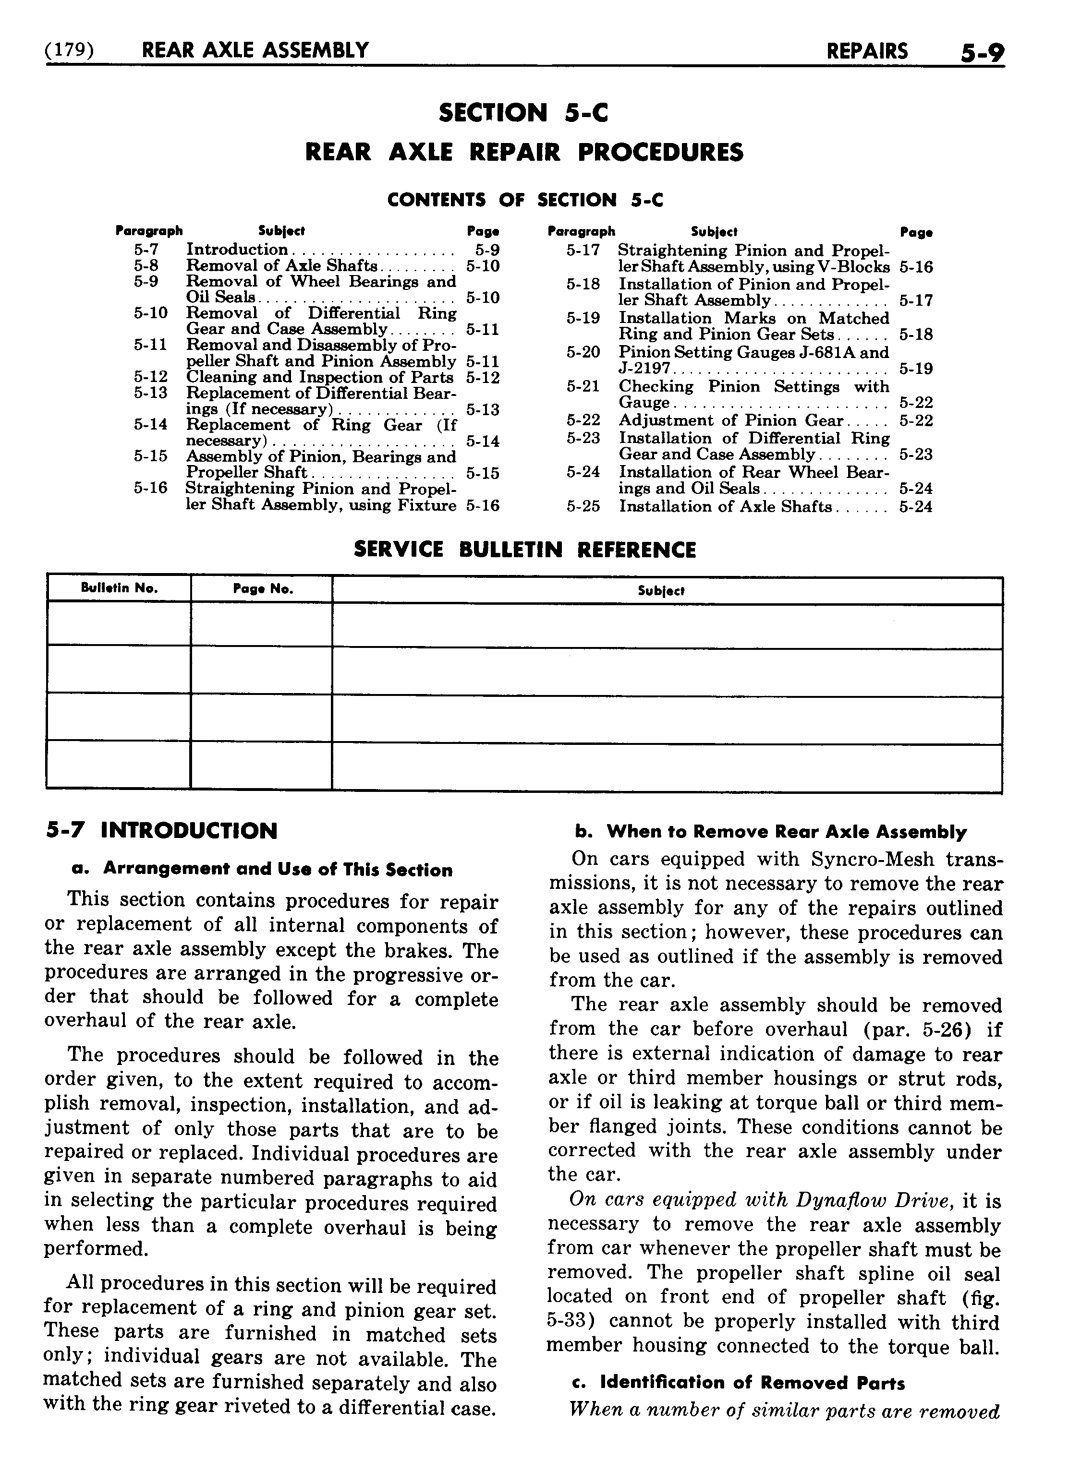 n_06 1948 Buick Shop Manual - Rear Axle-009-009.jpg